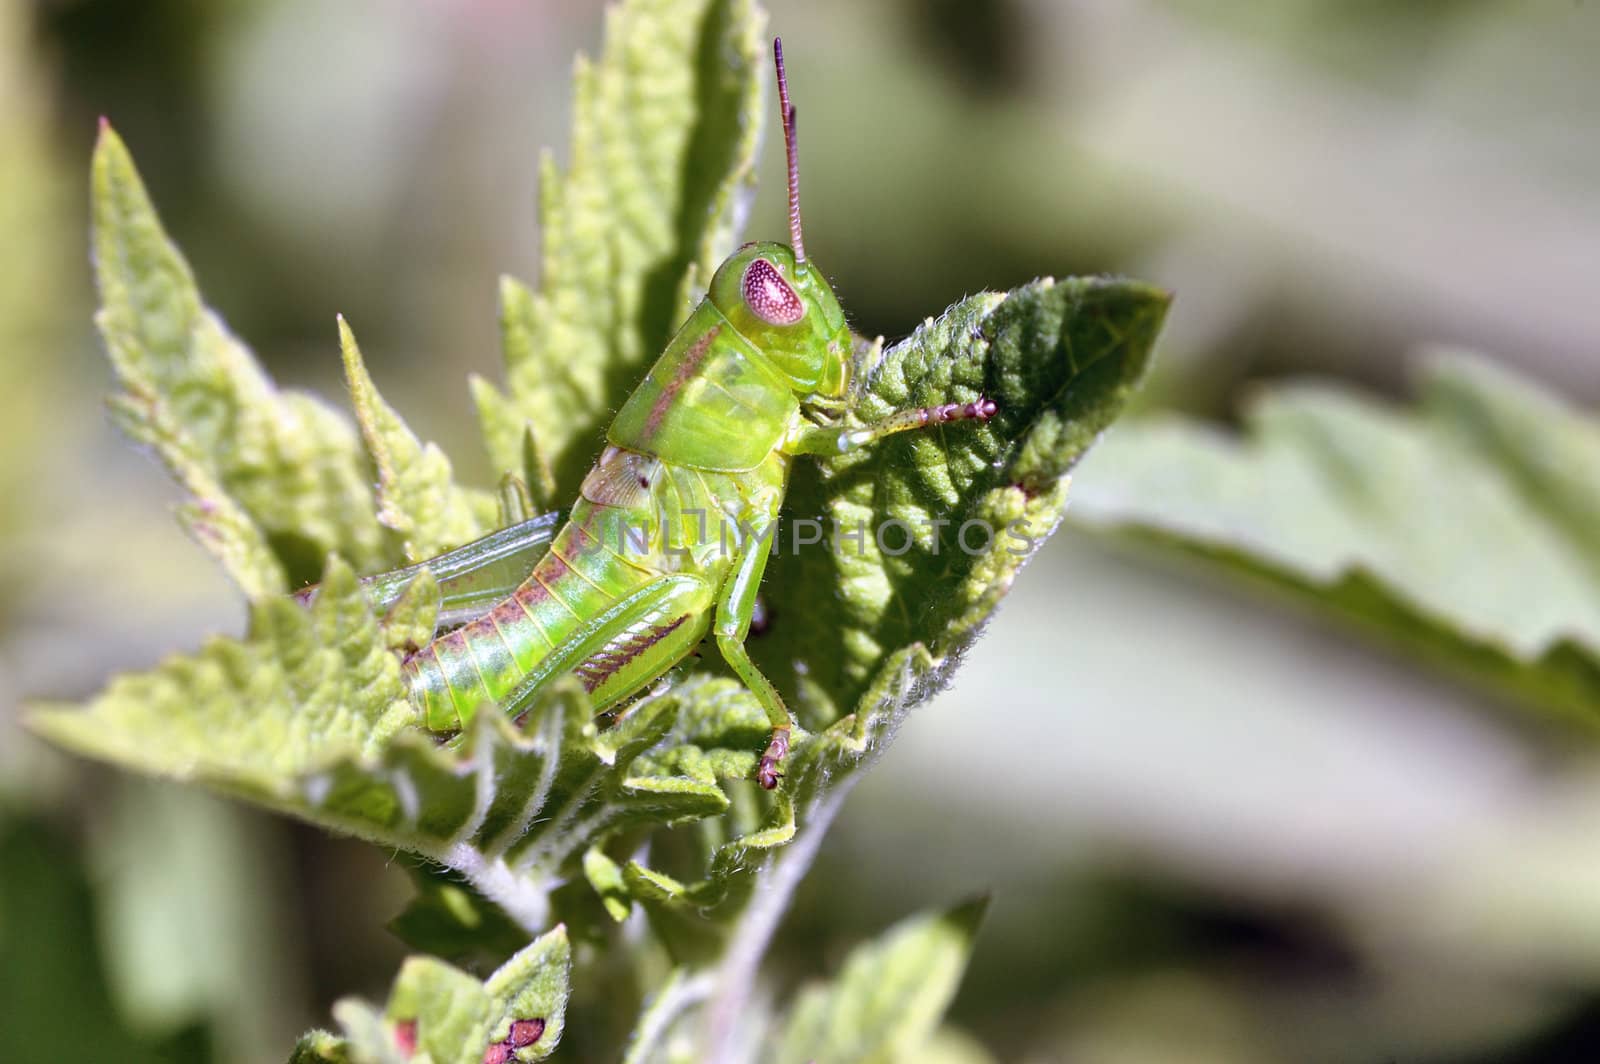 A grasshopper perched on a plant leaf.